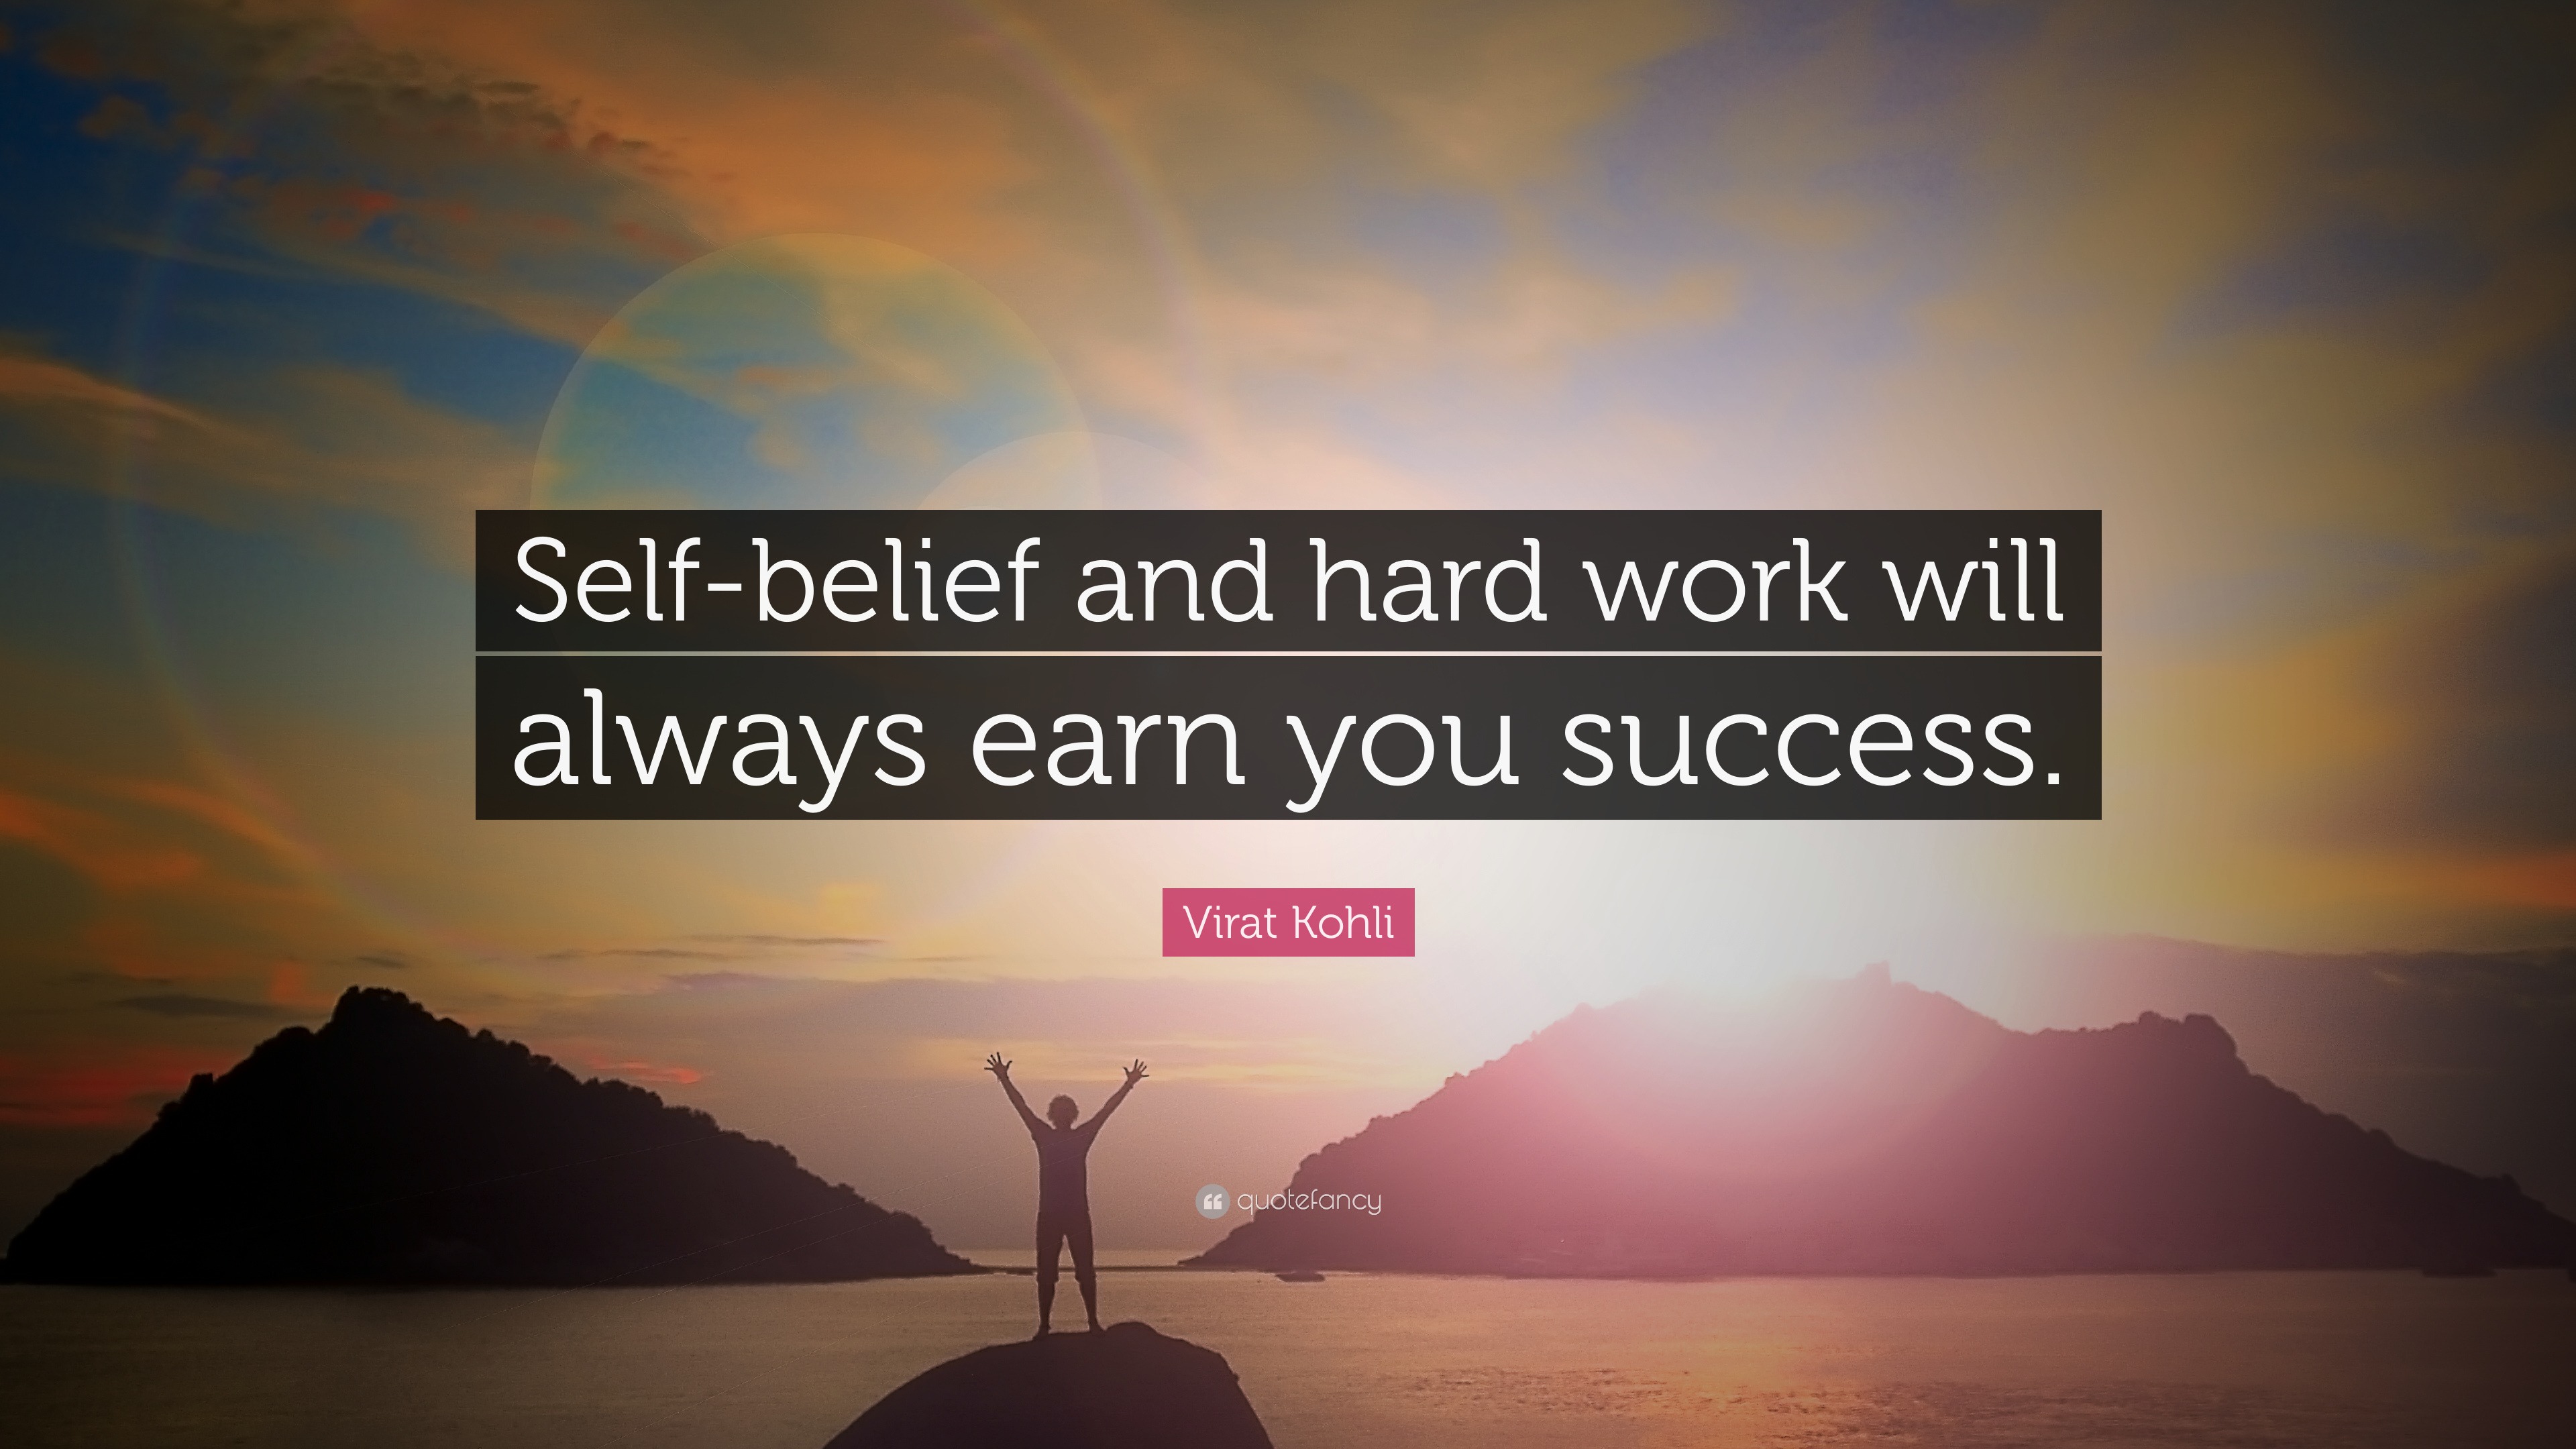 Virat Kohli Quote “Selfbelief and hard work will always